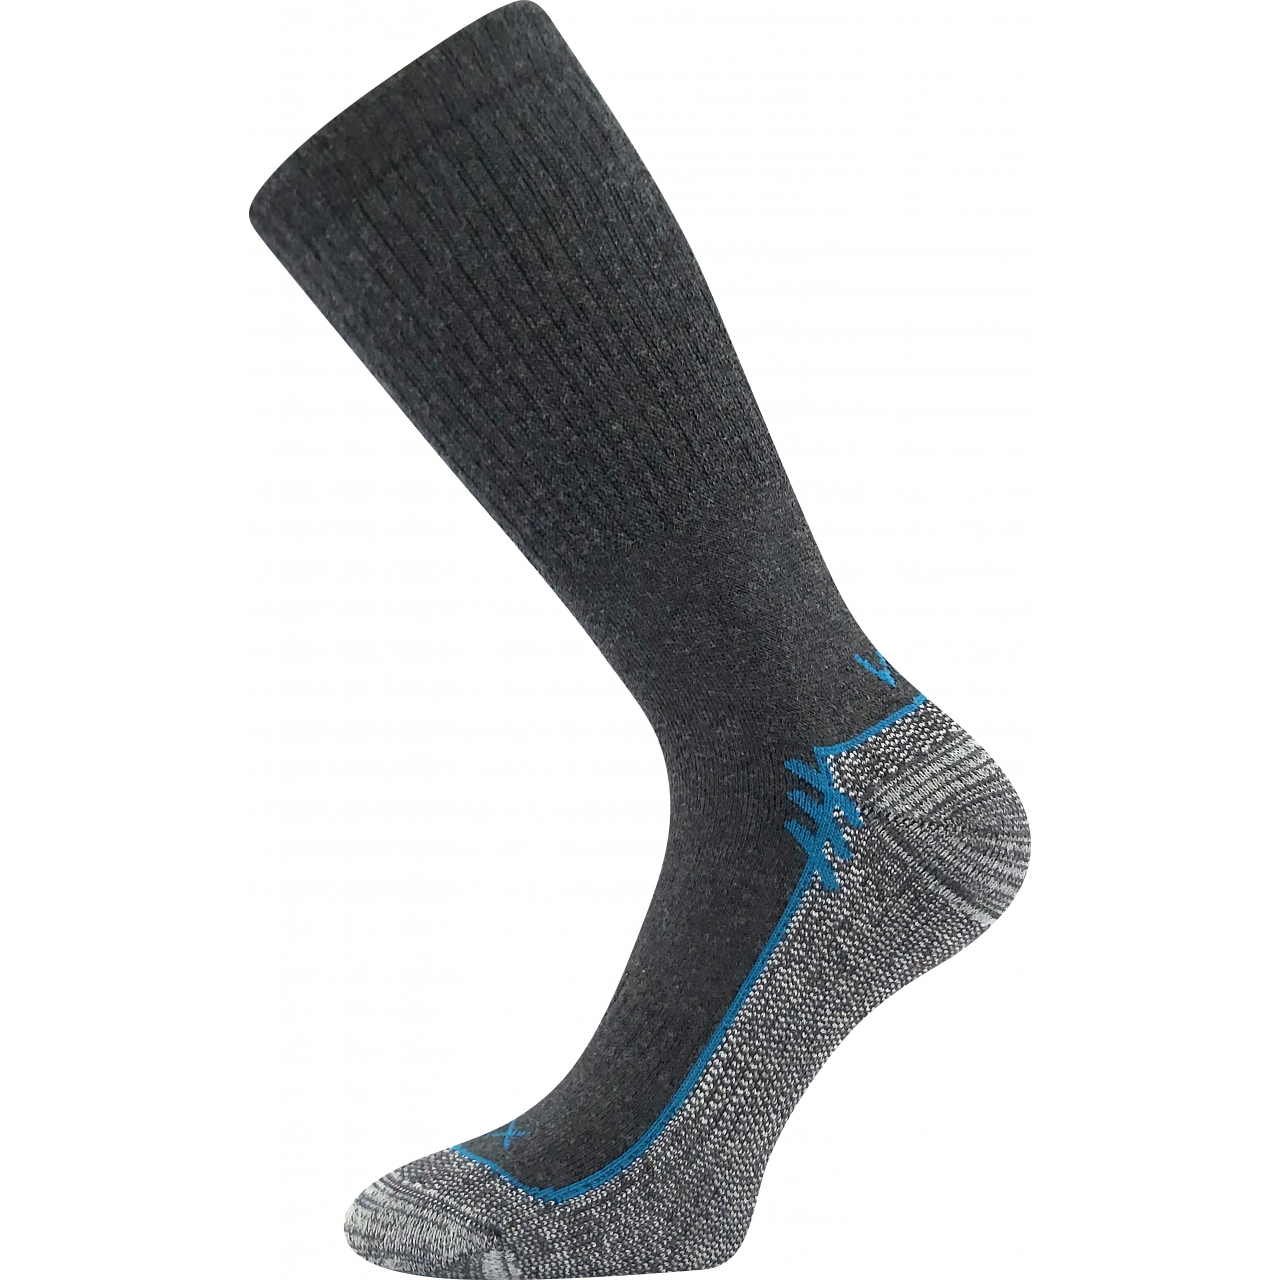 Ponožky trekingové unisex Voxx Phact - tmavě šedé, 43-46